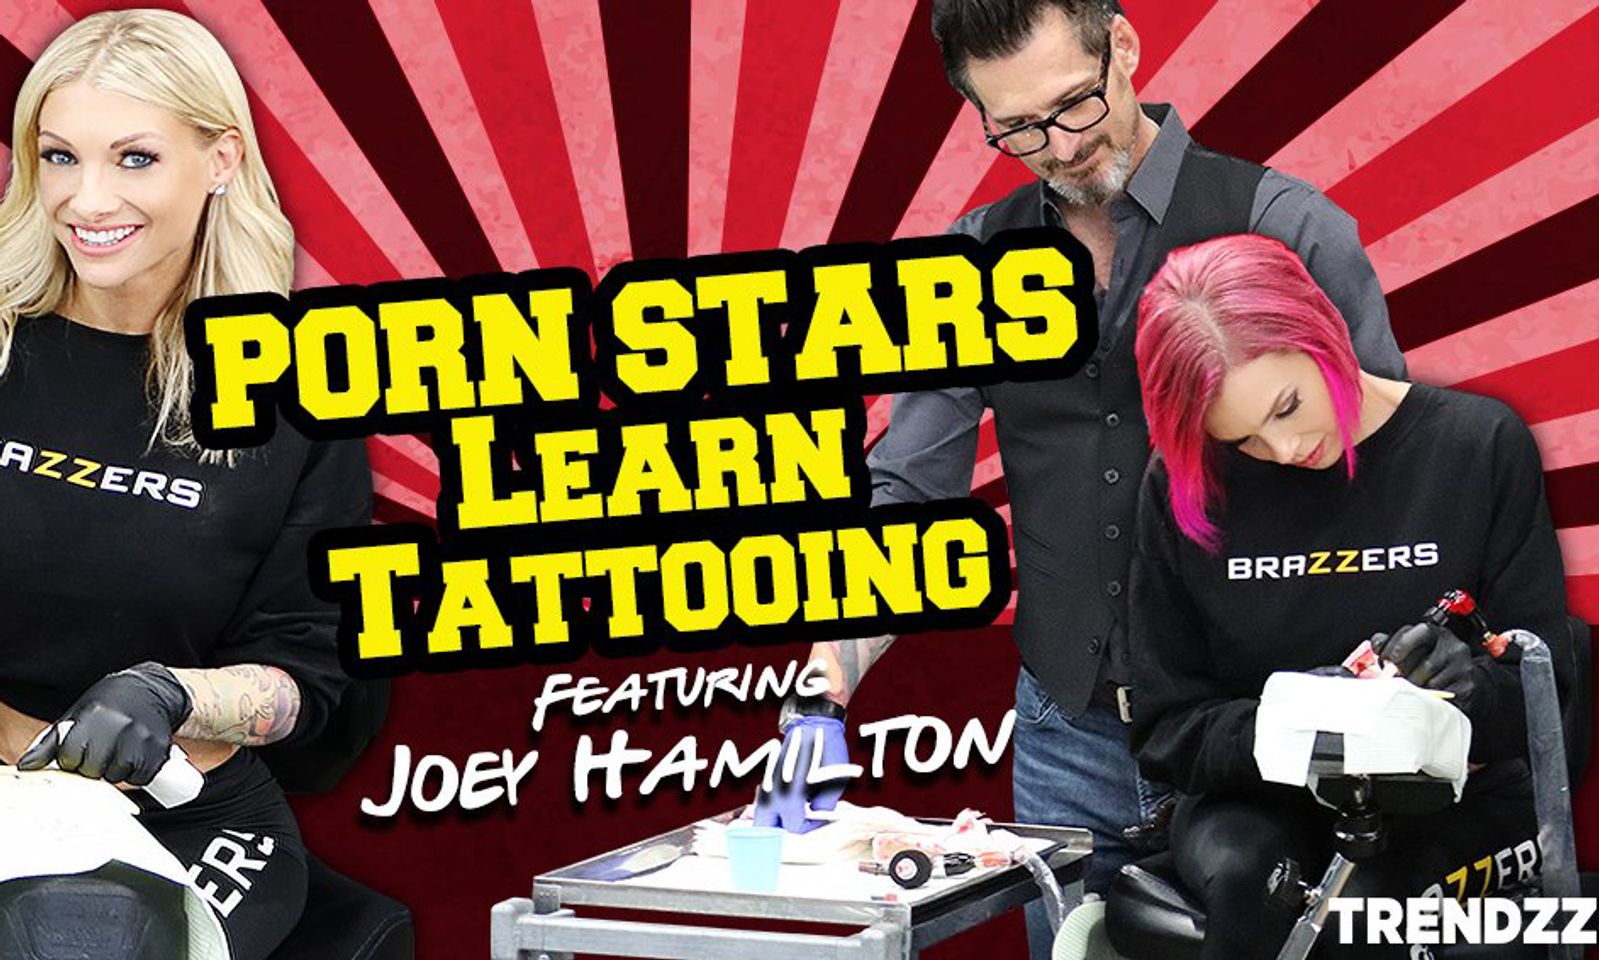 TV Tattoo Artist Teaches Peaks, Fixx to Ink for Trendzz